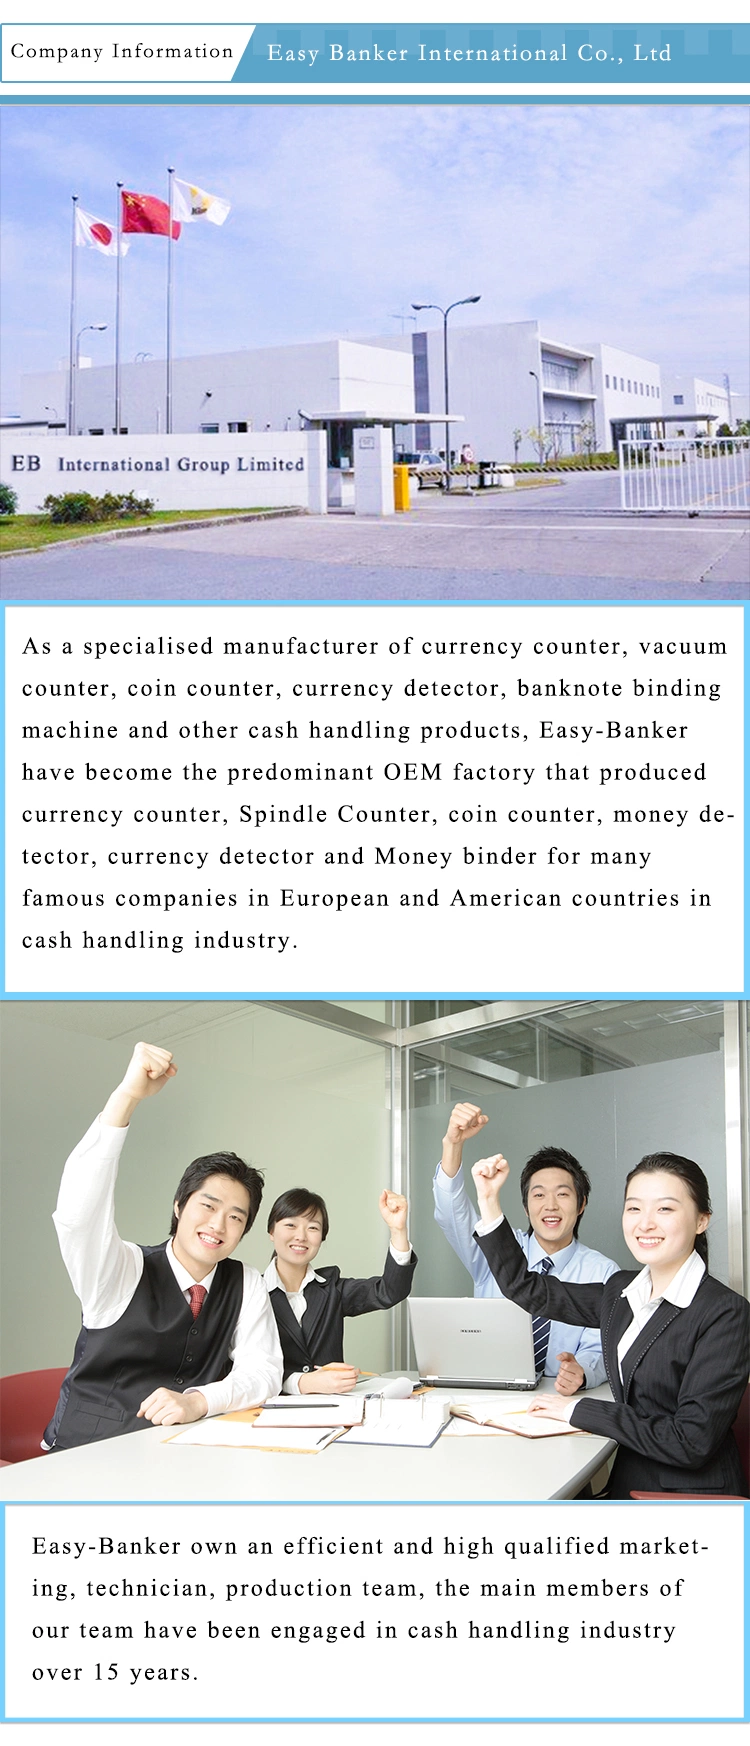 DC-106 Electronic Counterfeit Money Detector Fake Money Detection